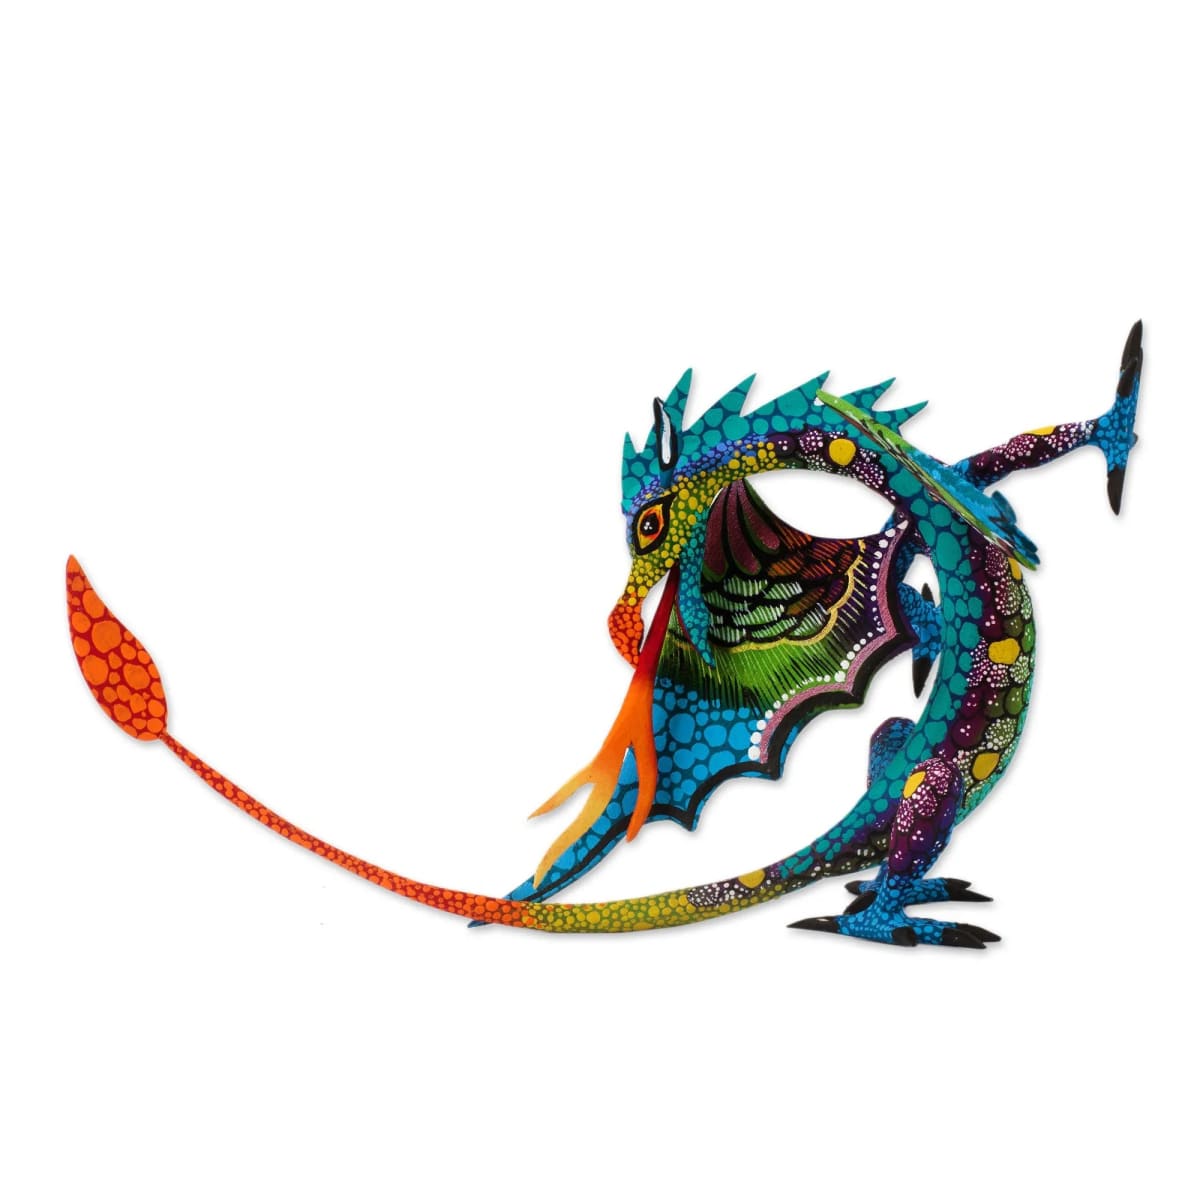 https://cdn.shopify.com/s/files/1/0256/0717/6266/files/novica-mexican-dragon-blue-wood-alebrije-sculpture-handmade-discovered-721.jpg